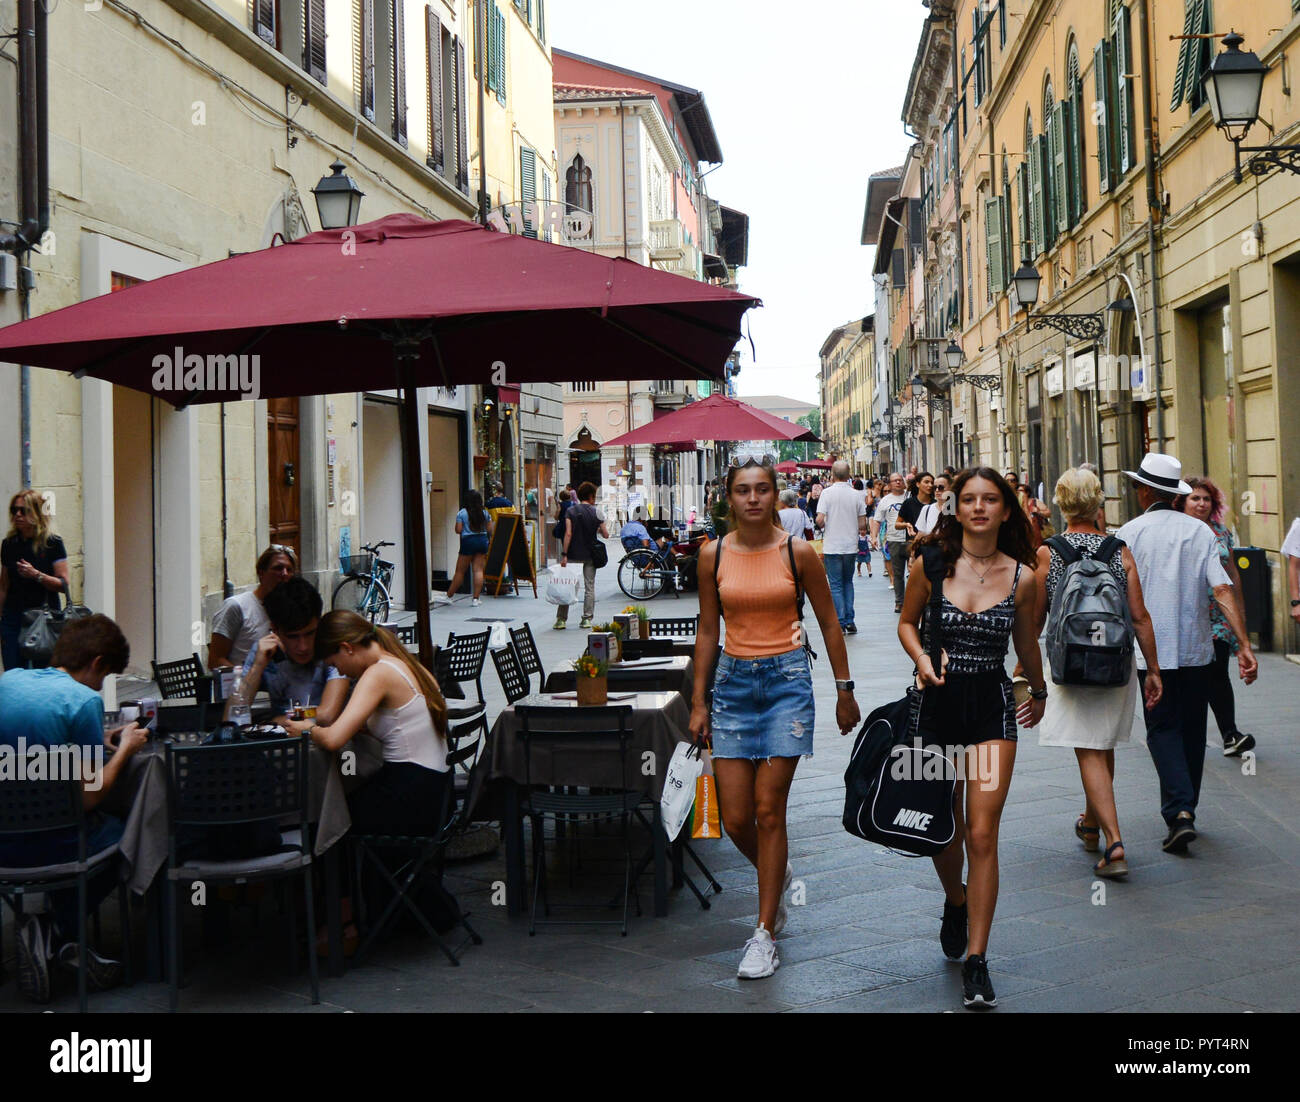 The Vibrant Corso Italia pedestrian street in Pisa, Italy. Stock Photo